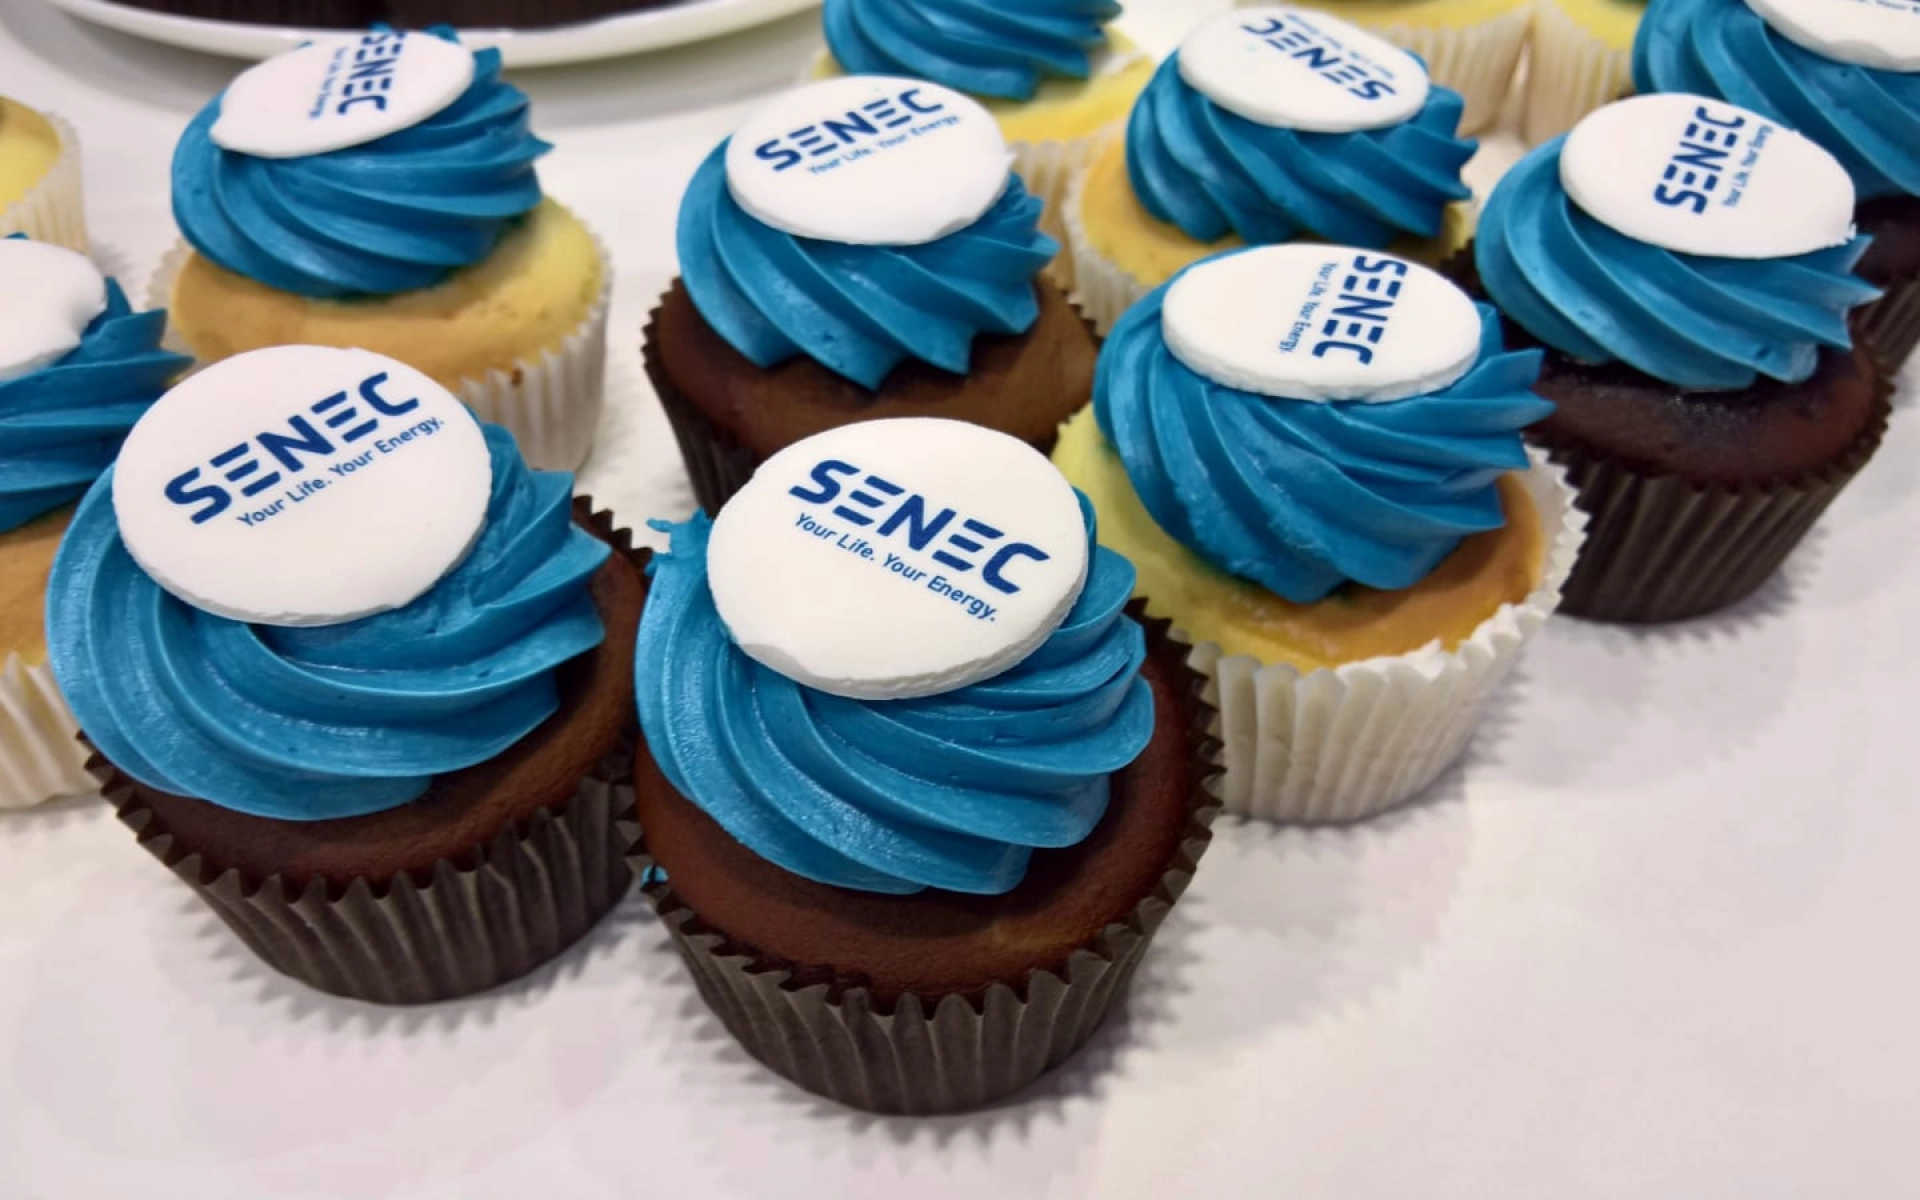 Cupcakes with SENEC logo